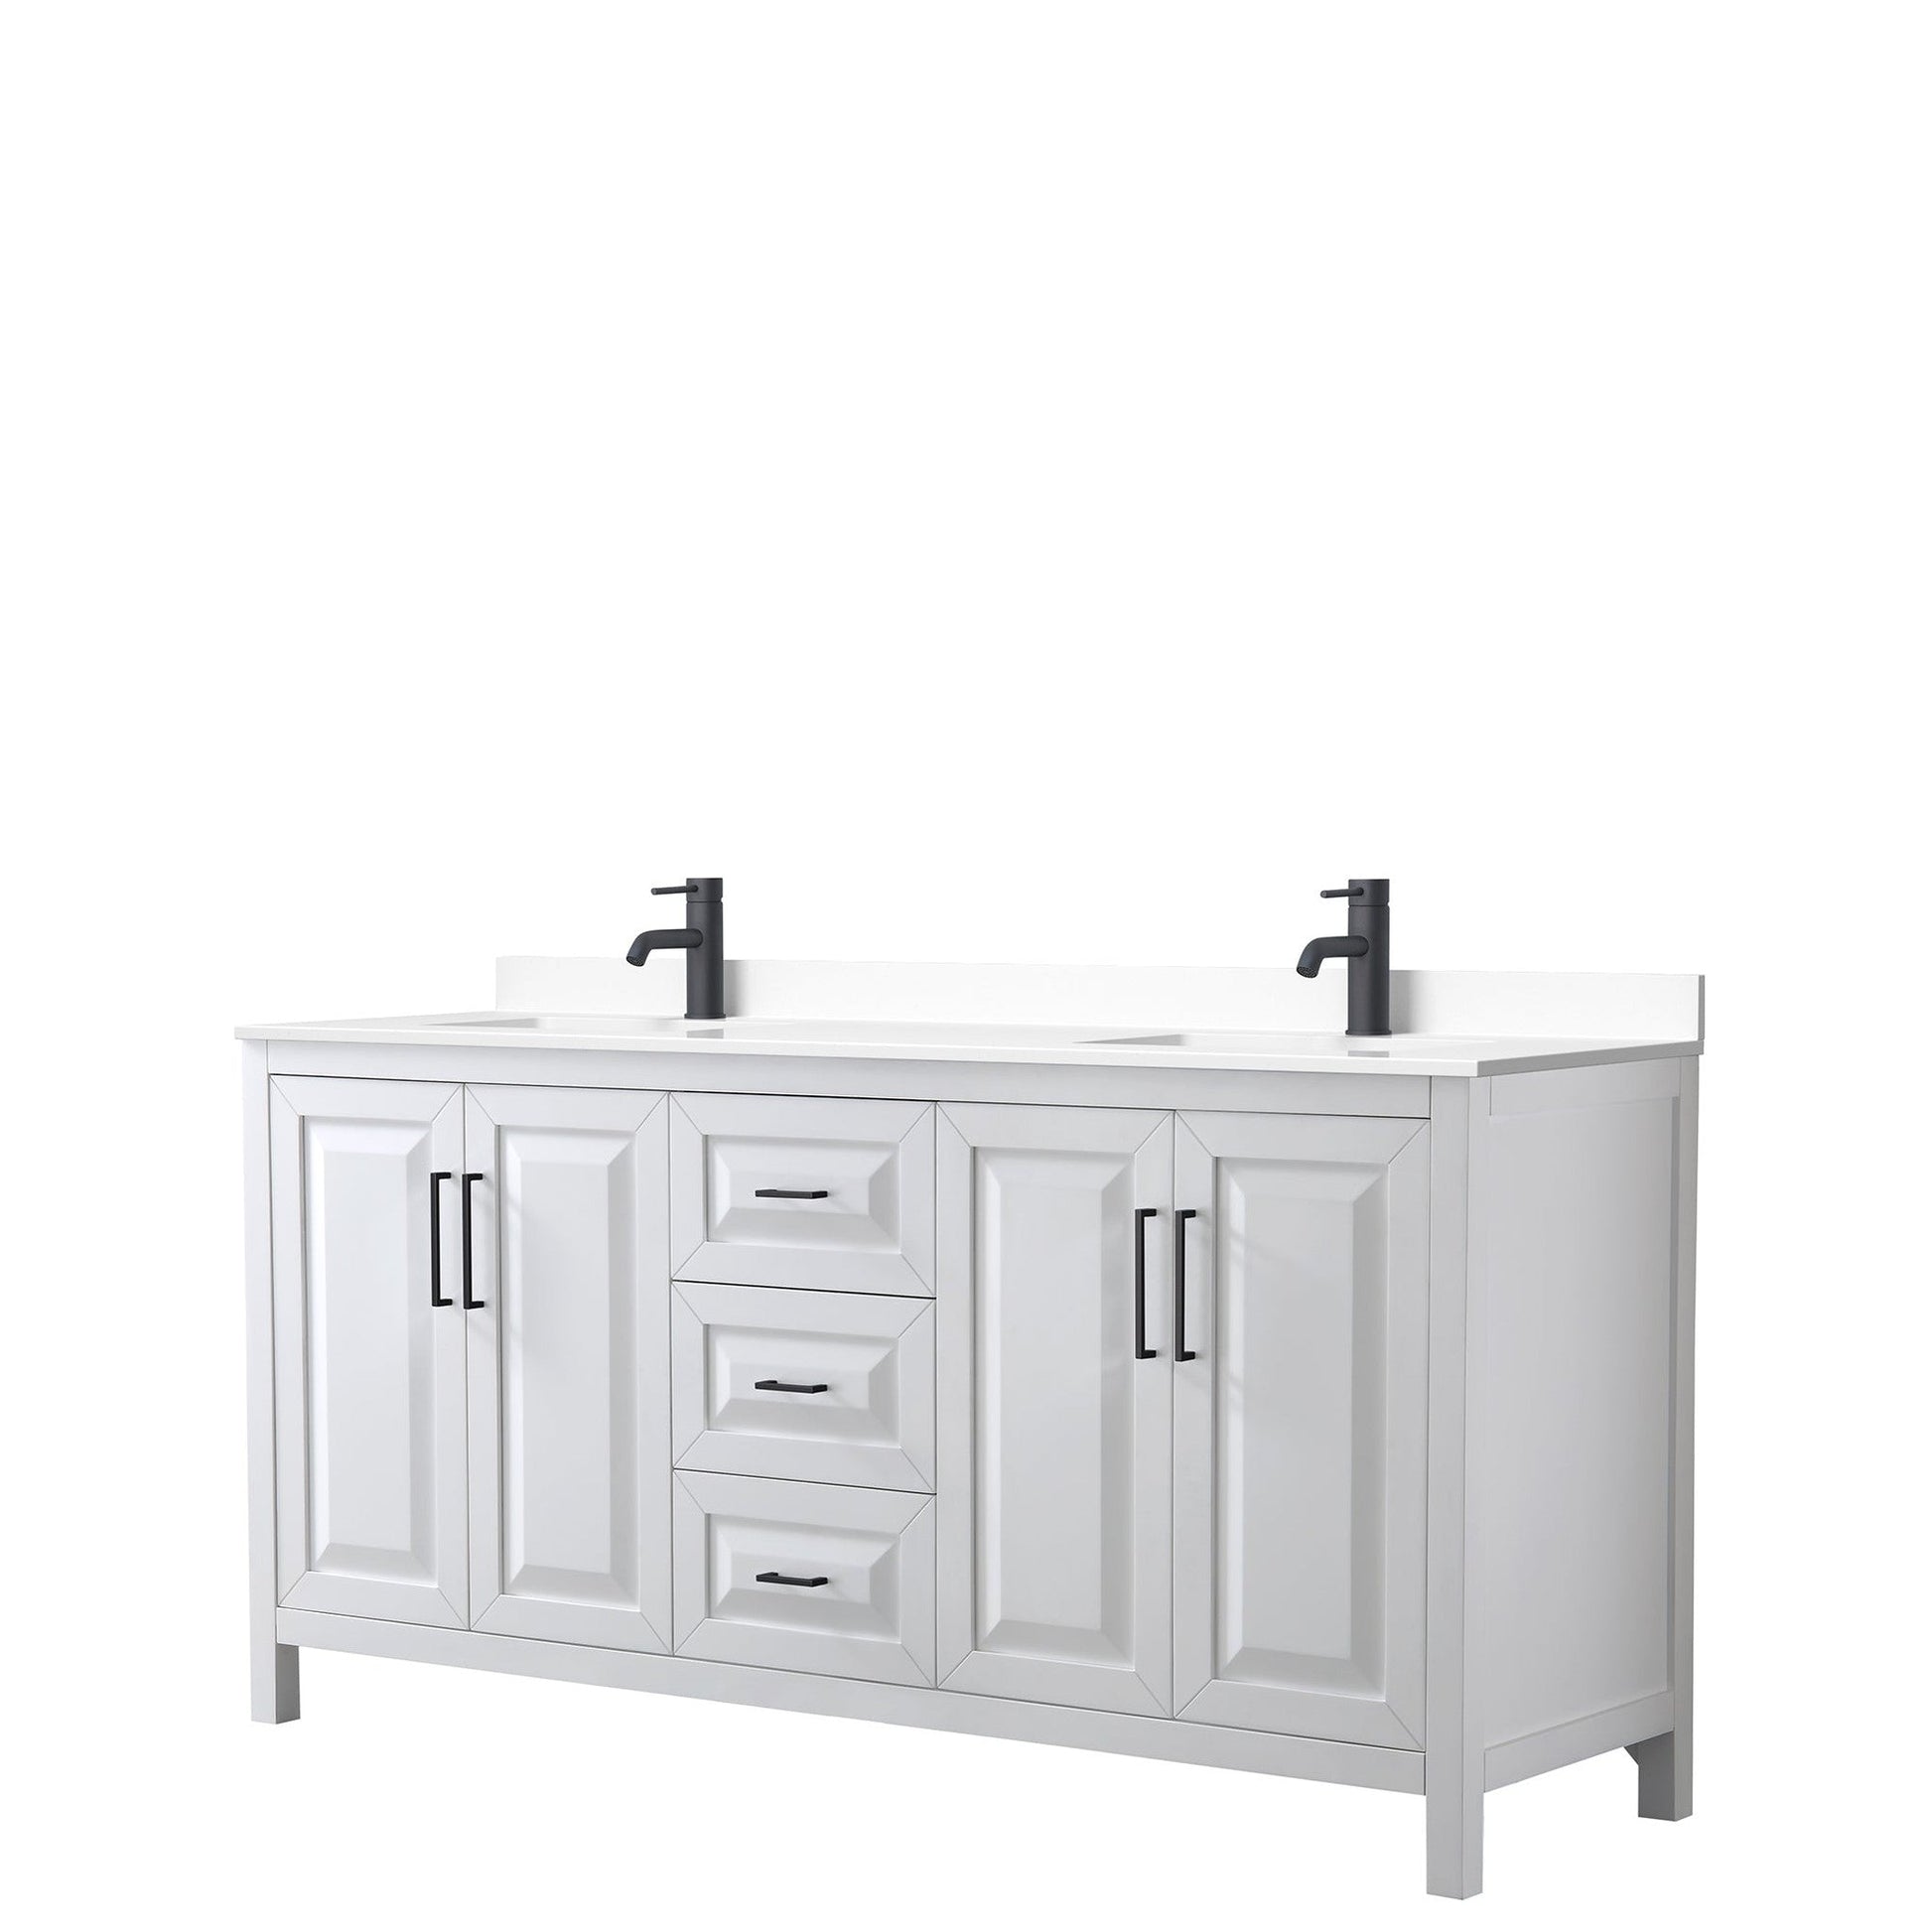 Daria 72" Double Bathroom Vanity in White, White Cultured Marble Countertop, Undermount Square Sinks, Matte Black Trim